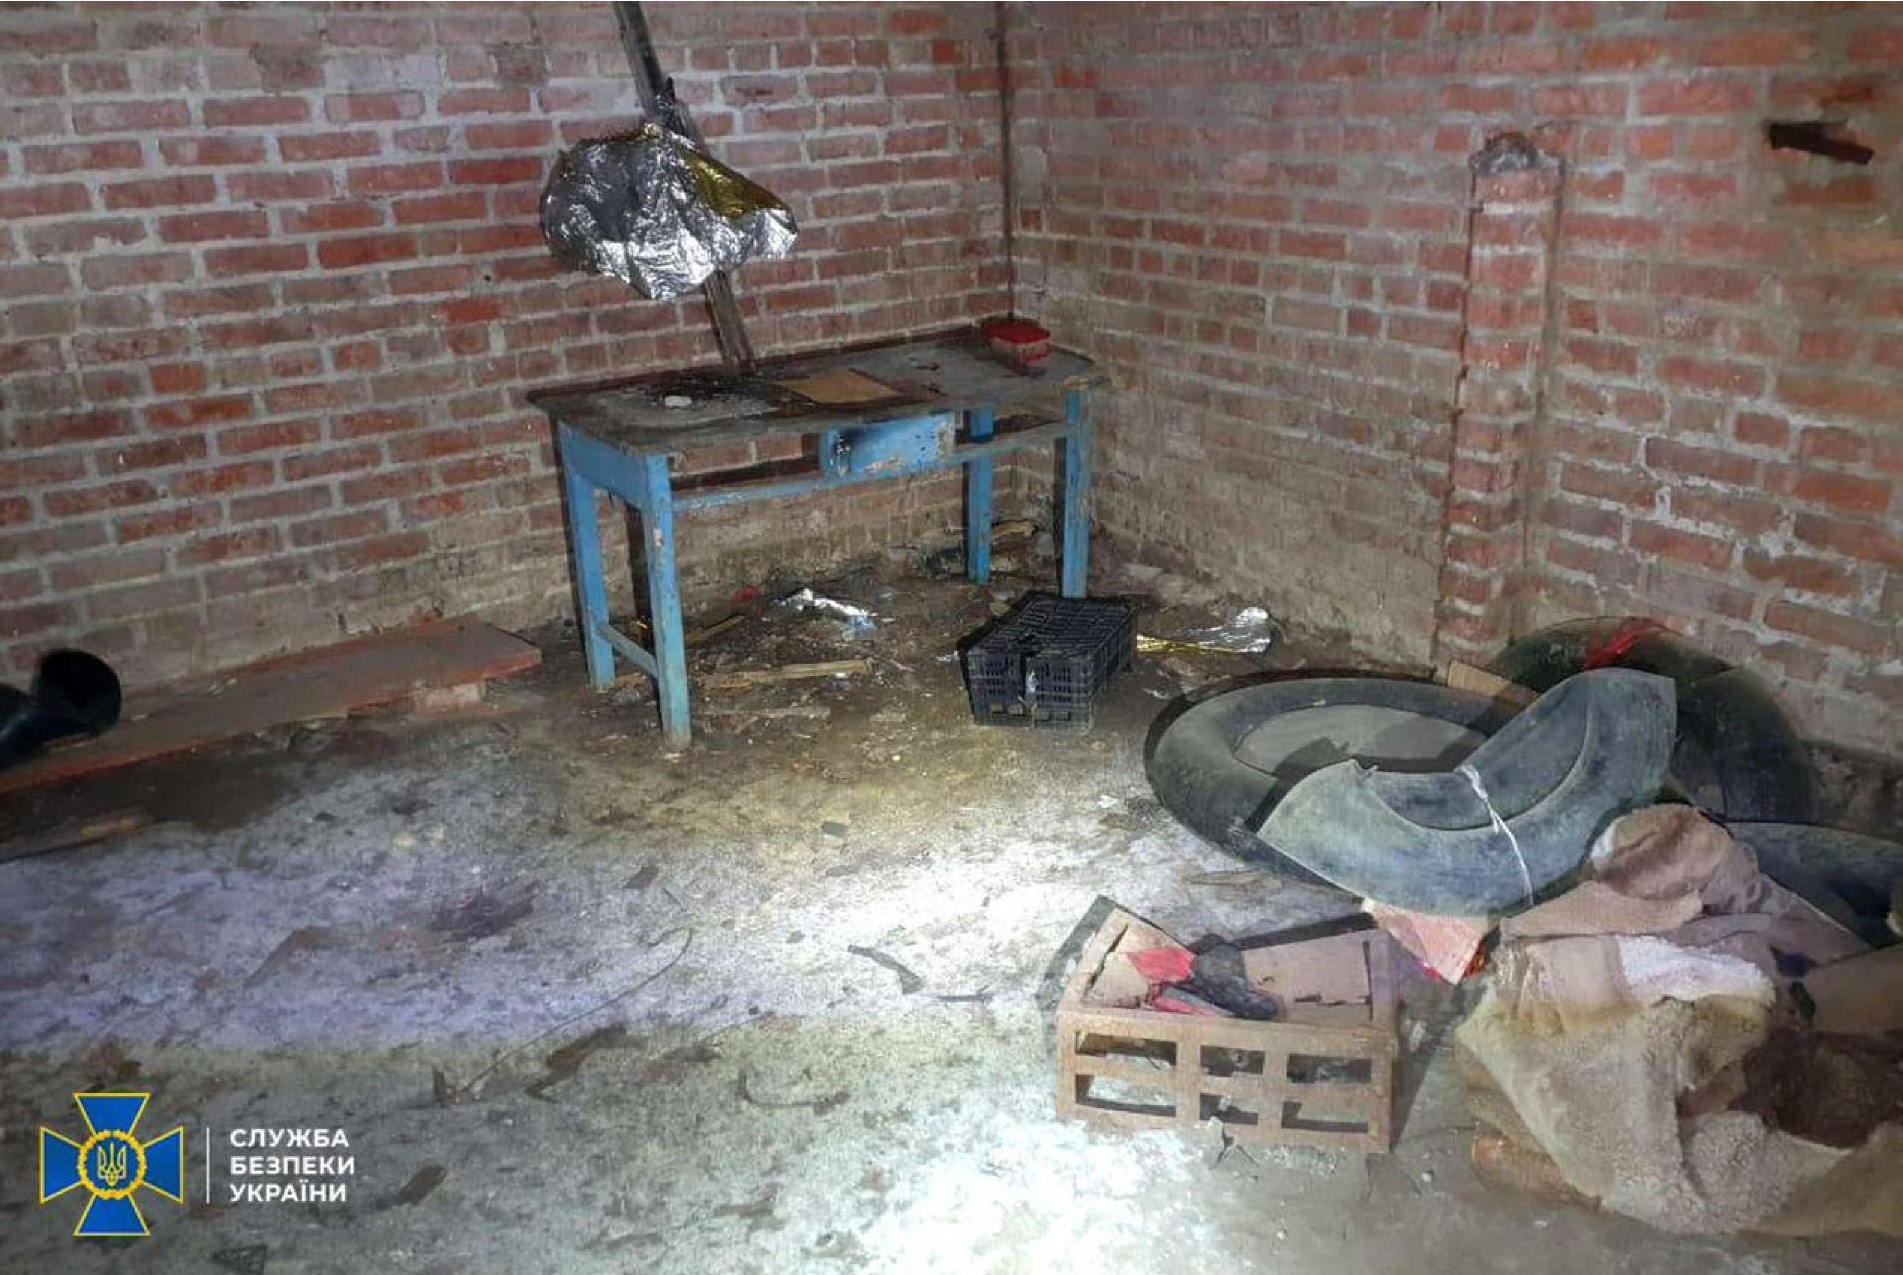 Kharkiv oblast Prison - torture chamber found in the village of Lyptsi Photo SBU